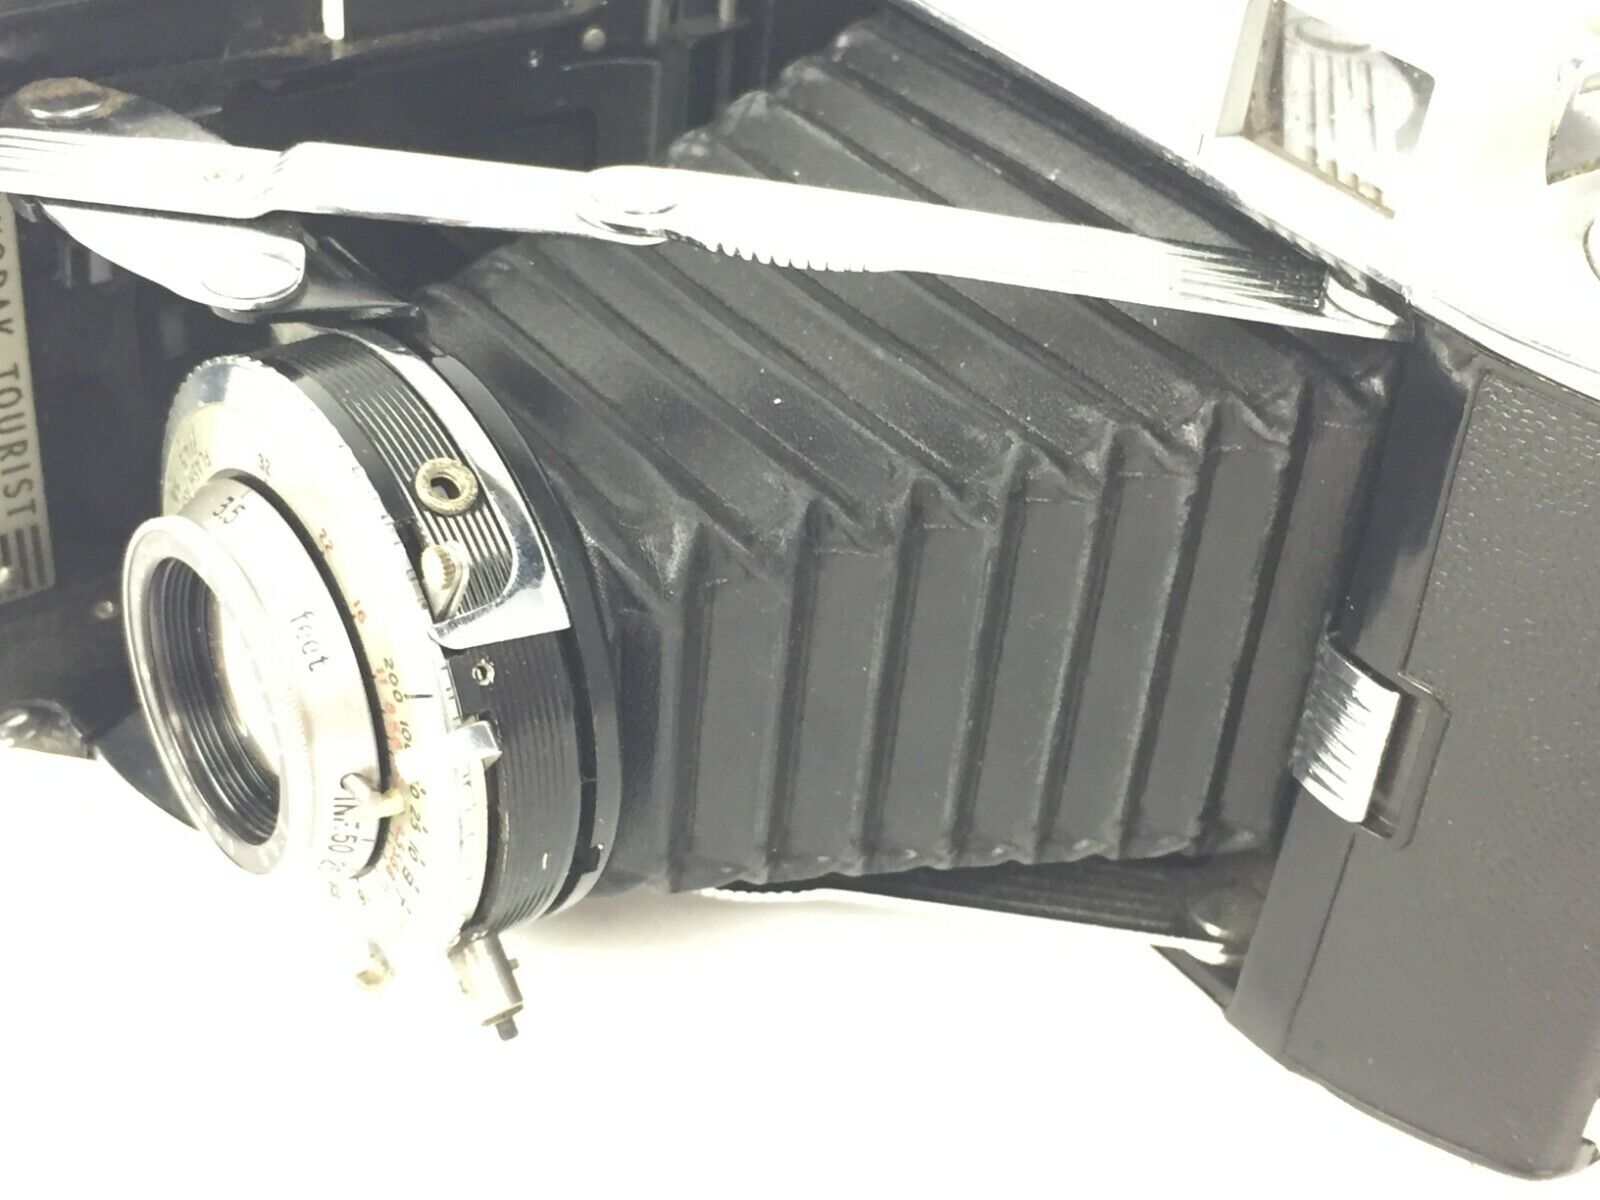 Kodak Super XX Verichrome Plus X KodaColor Camera 1:4.5 105mm 620 FIlm